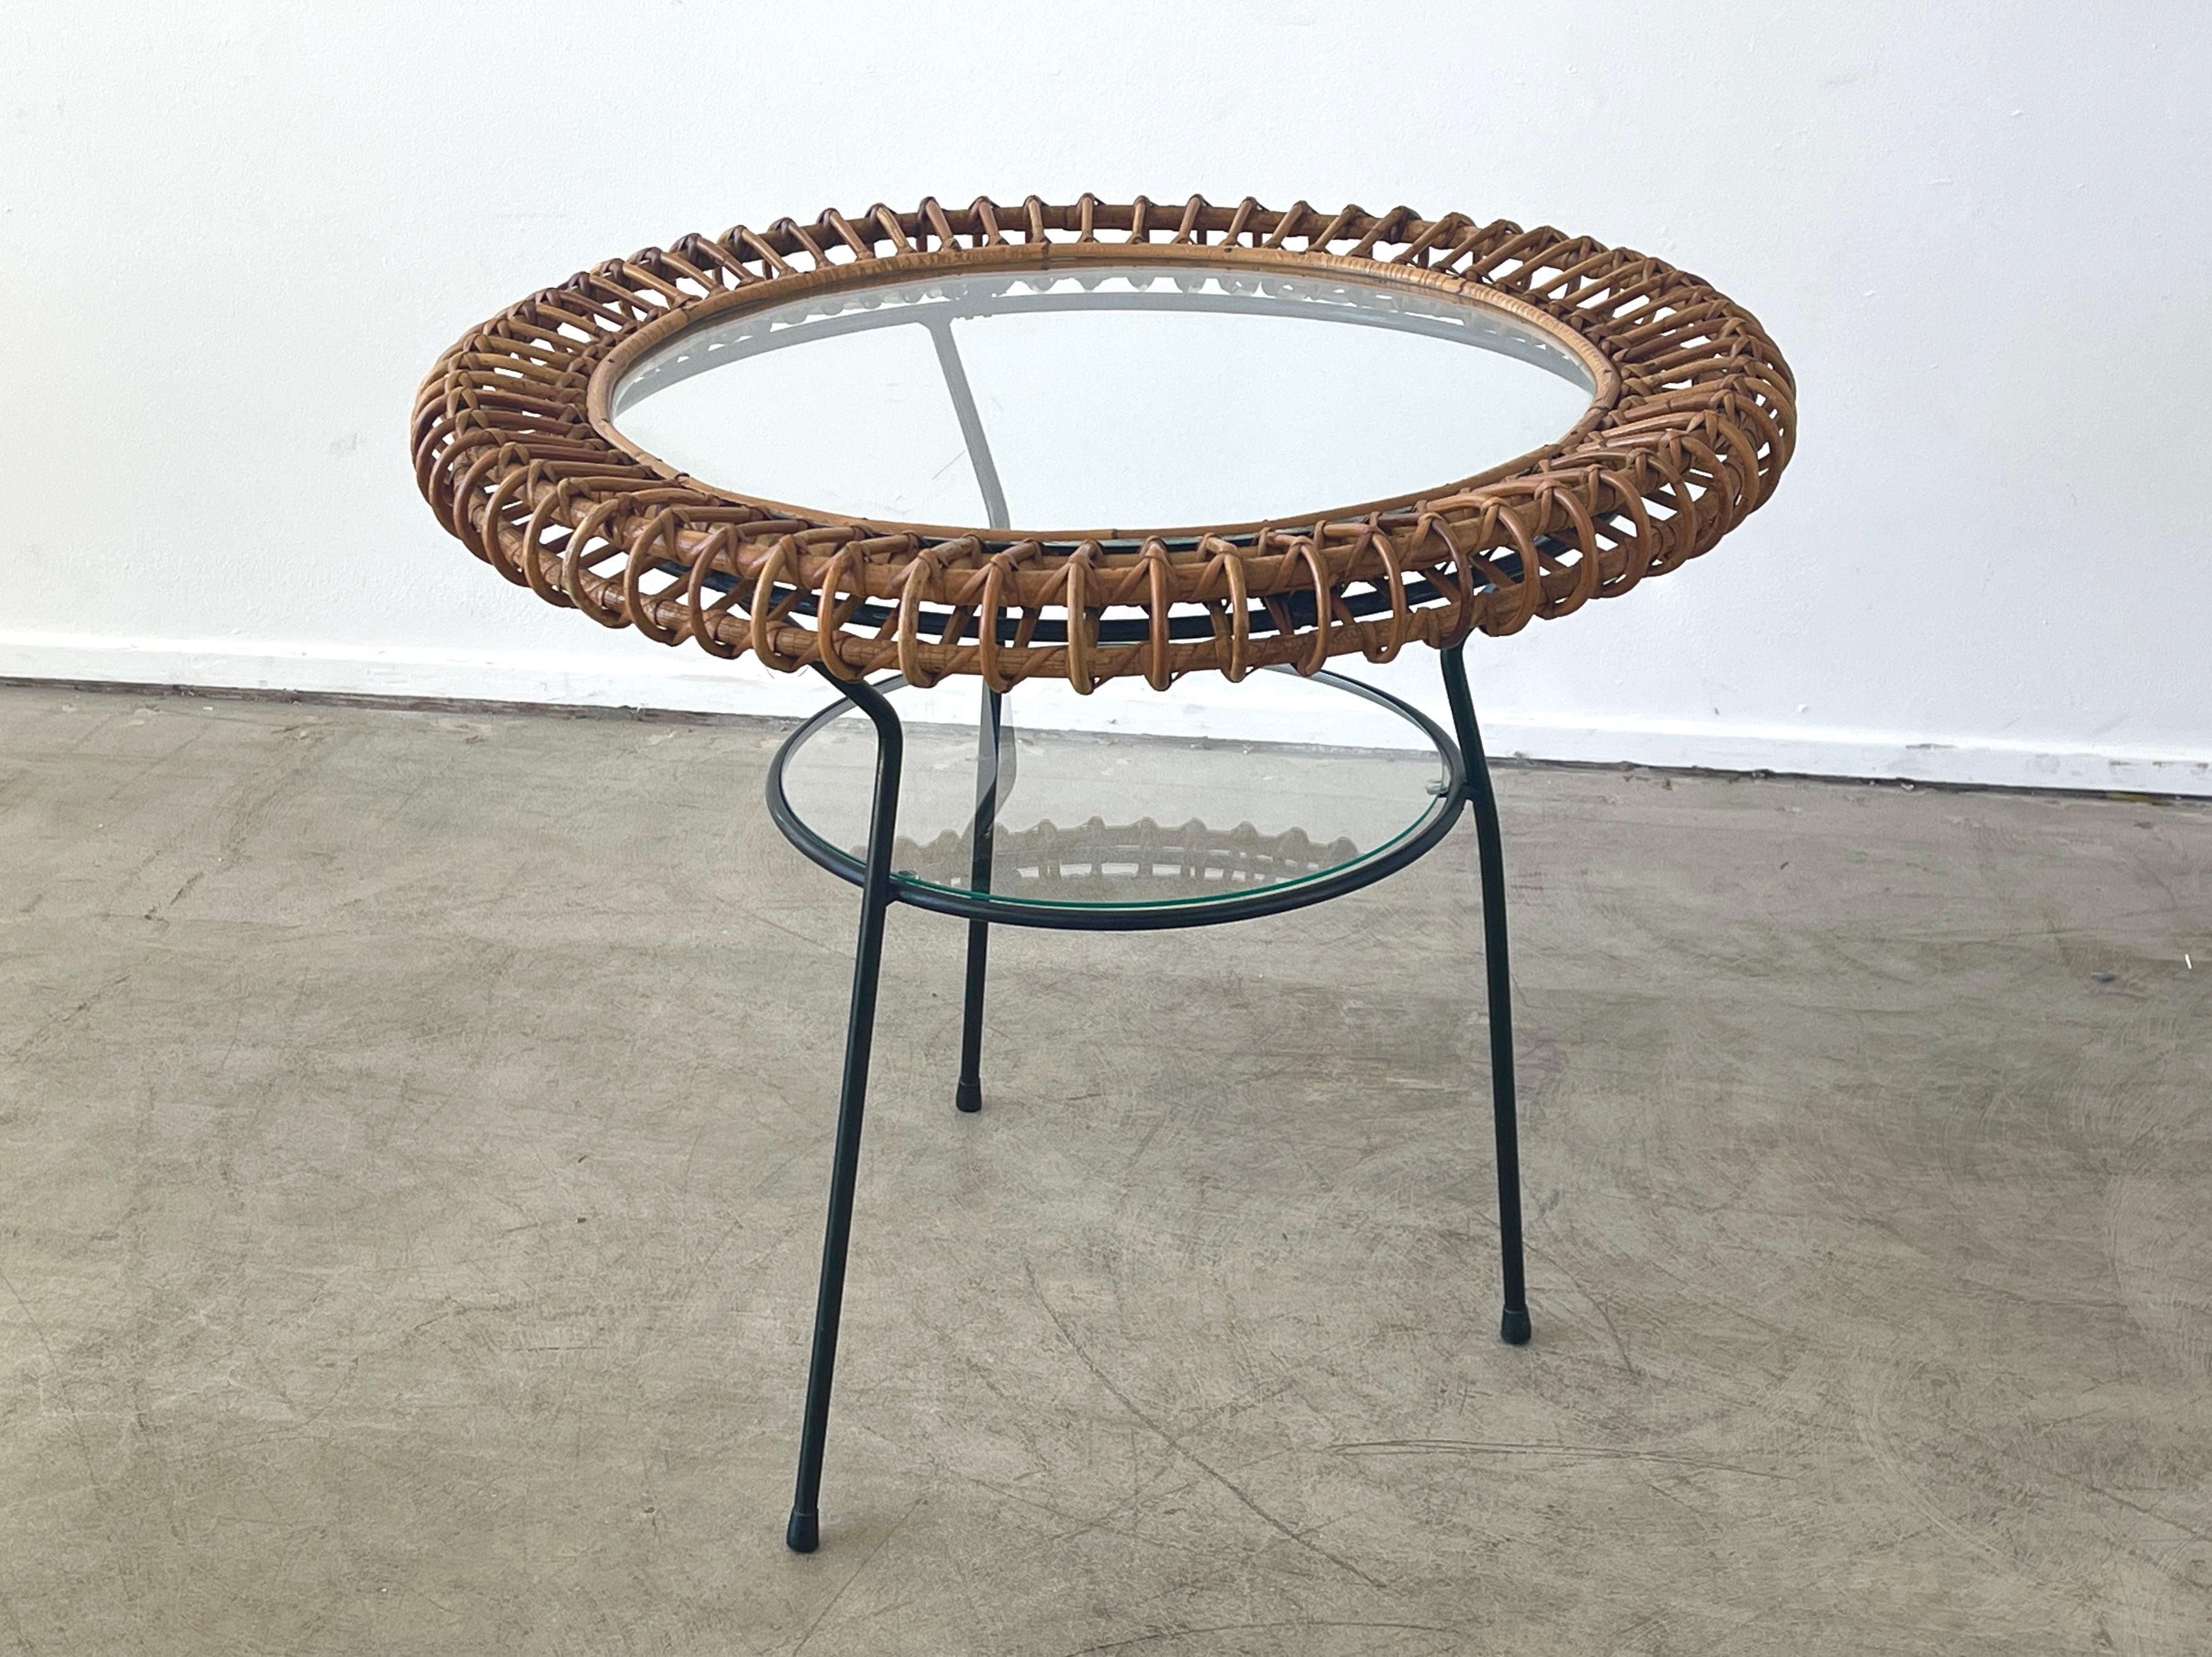 Bonacina side table with iron frame and circular bamboo top. 
2 Tiers of glass.